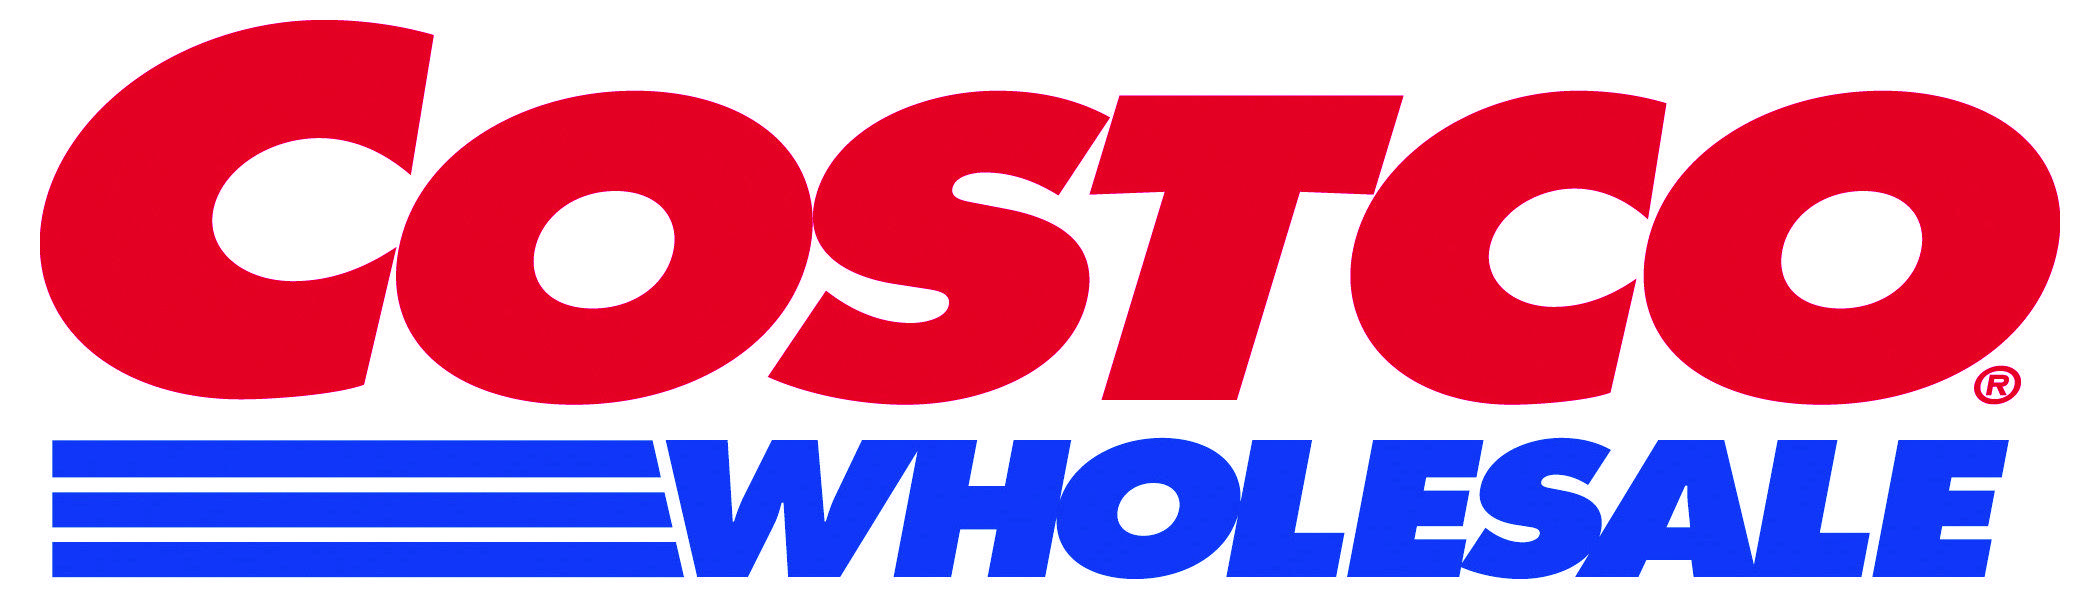 Costco Club Logo - Wholesale Products Australia